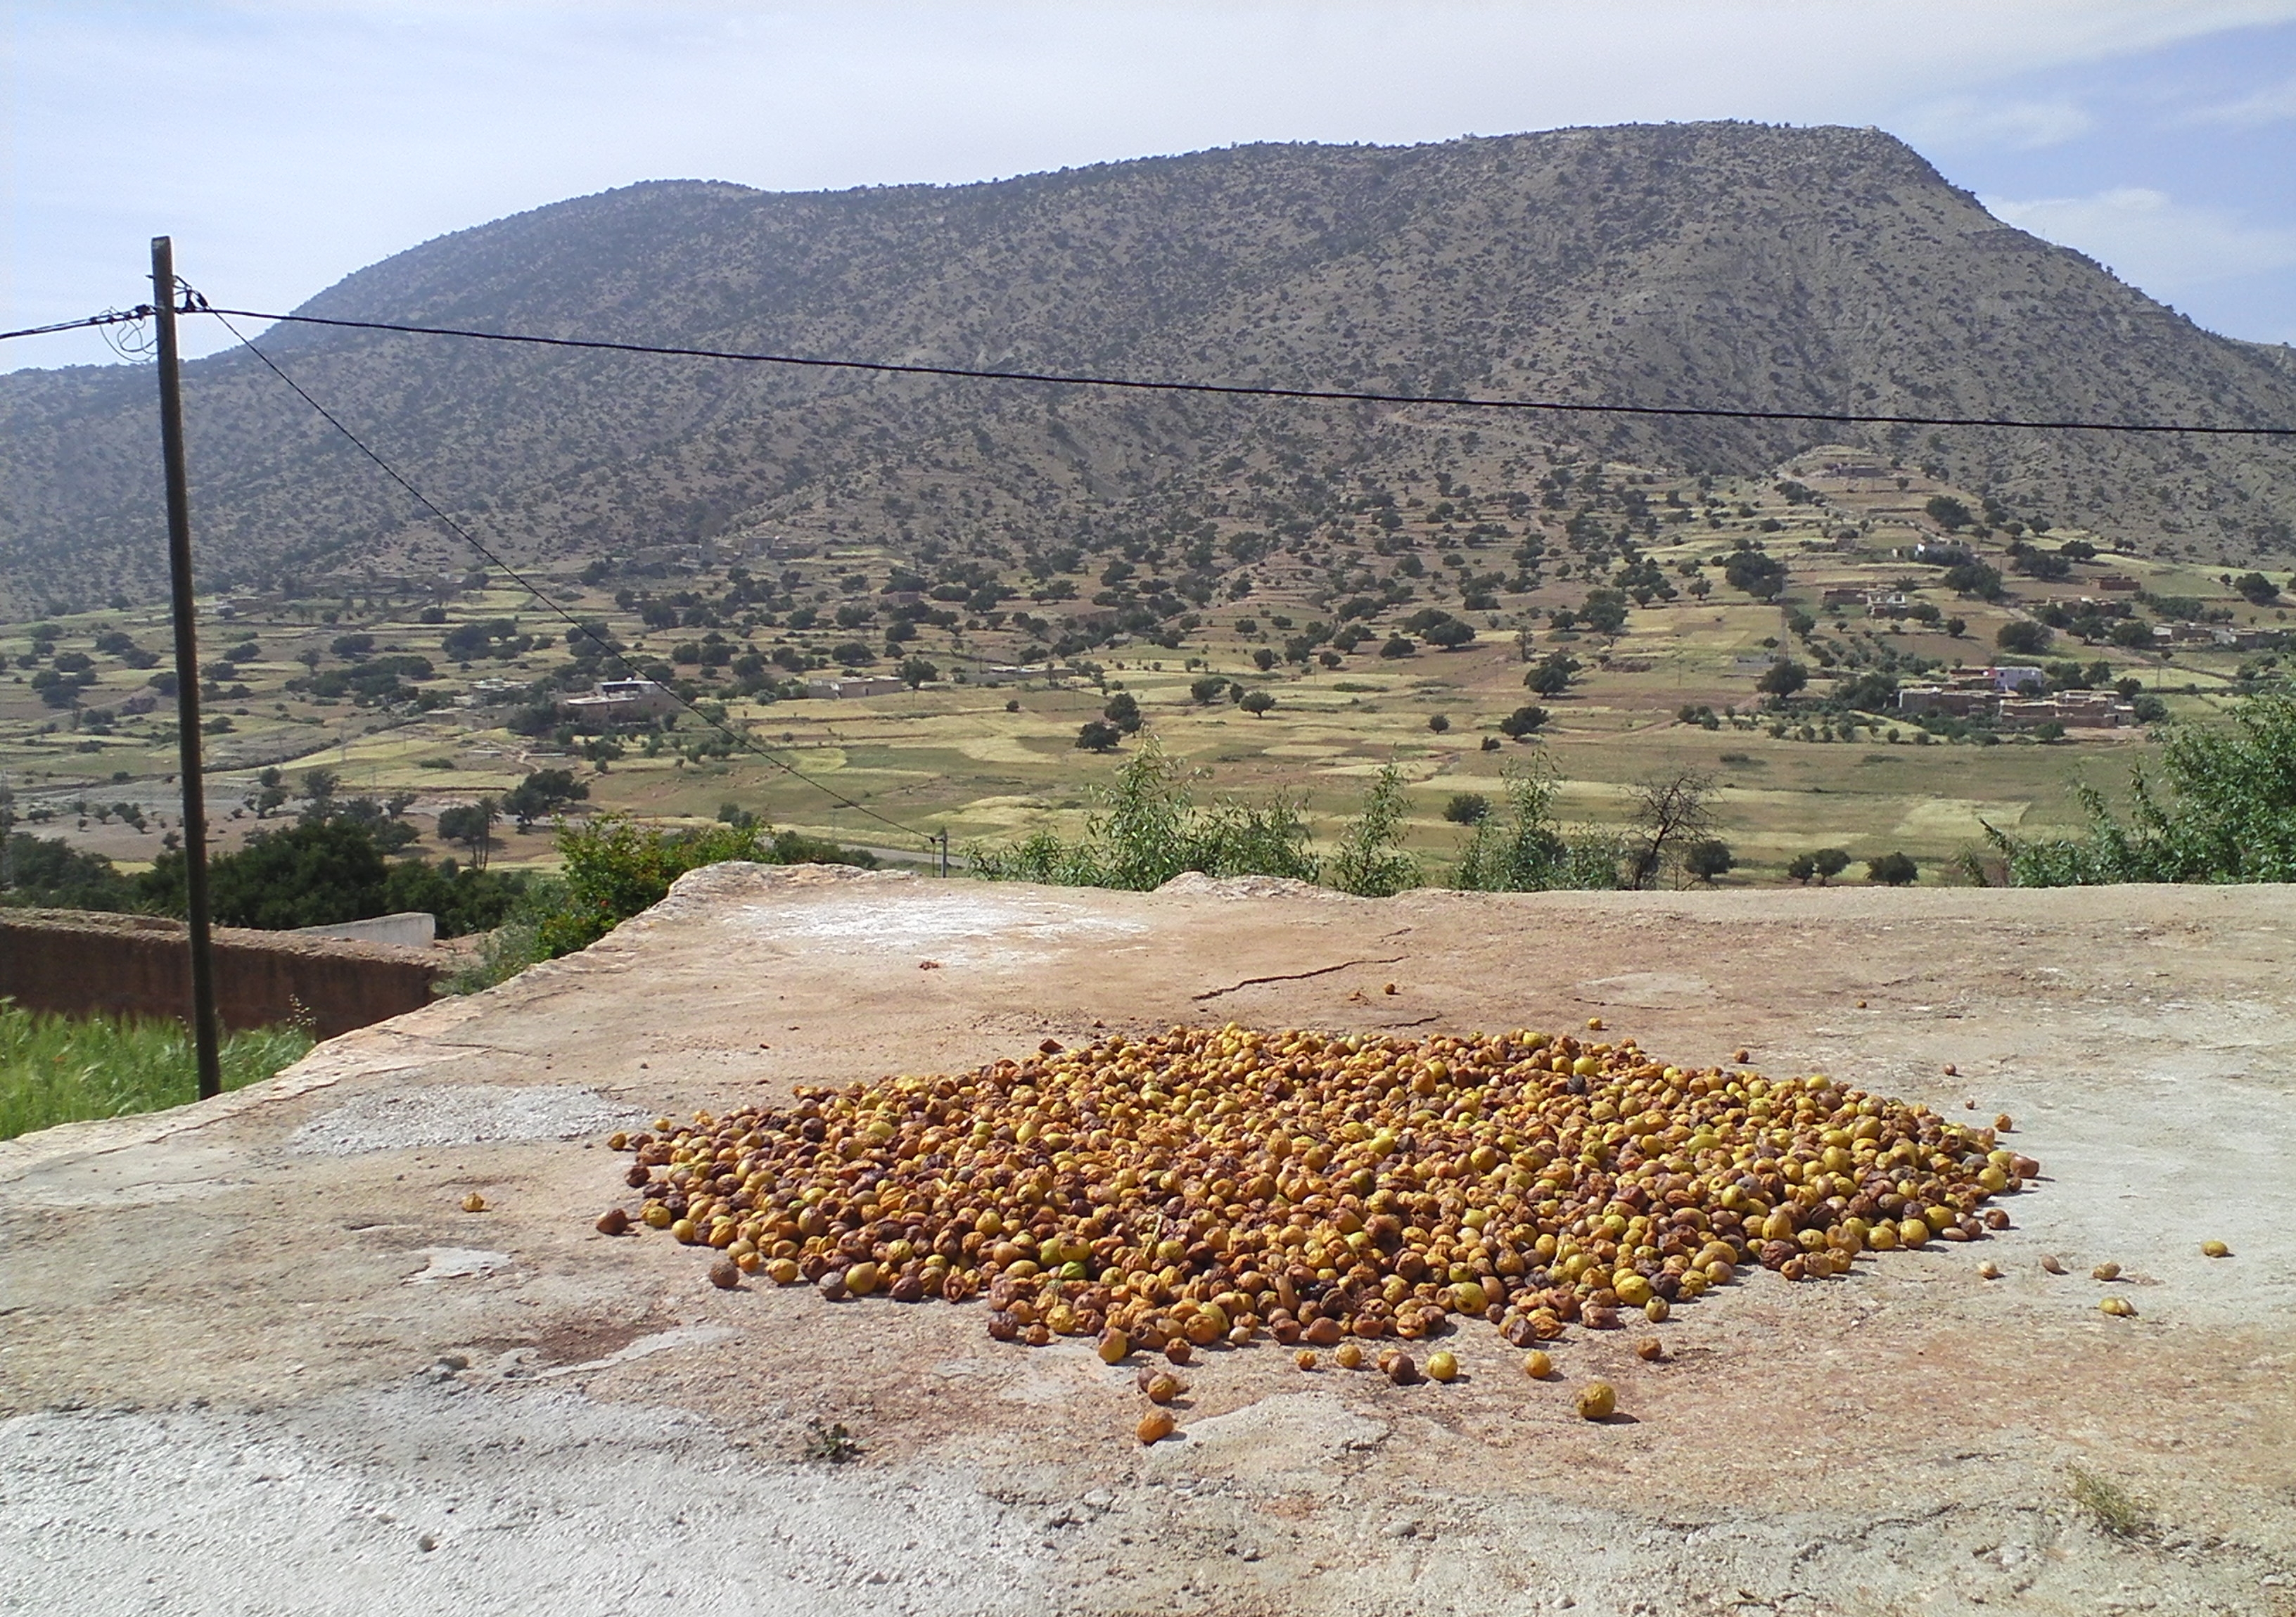 Moroccan argan fruit drying on a plateau in the sun near Essaouira, western Morocco